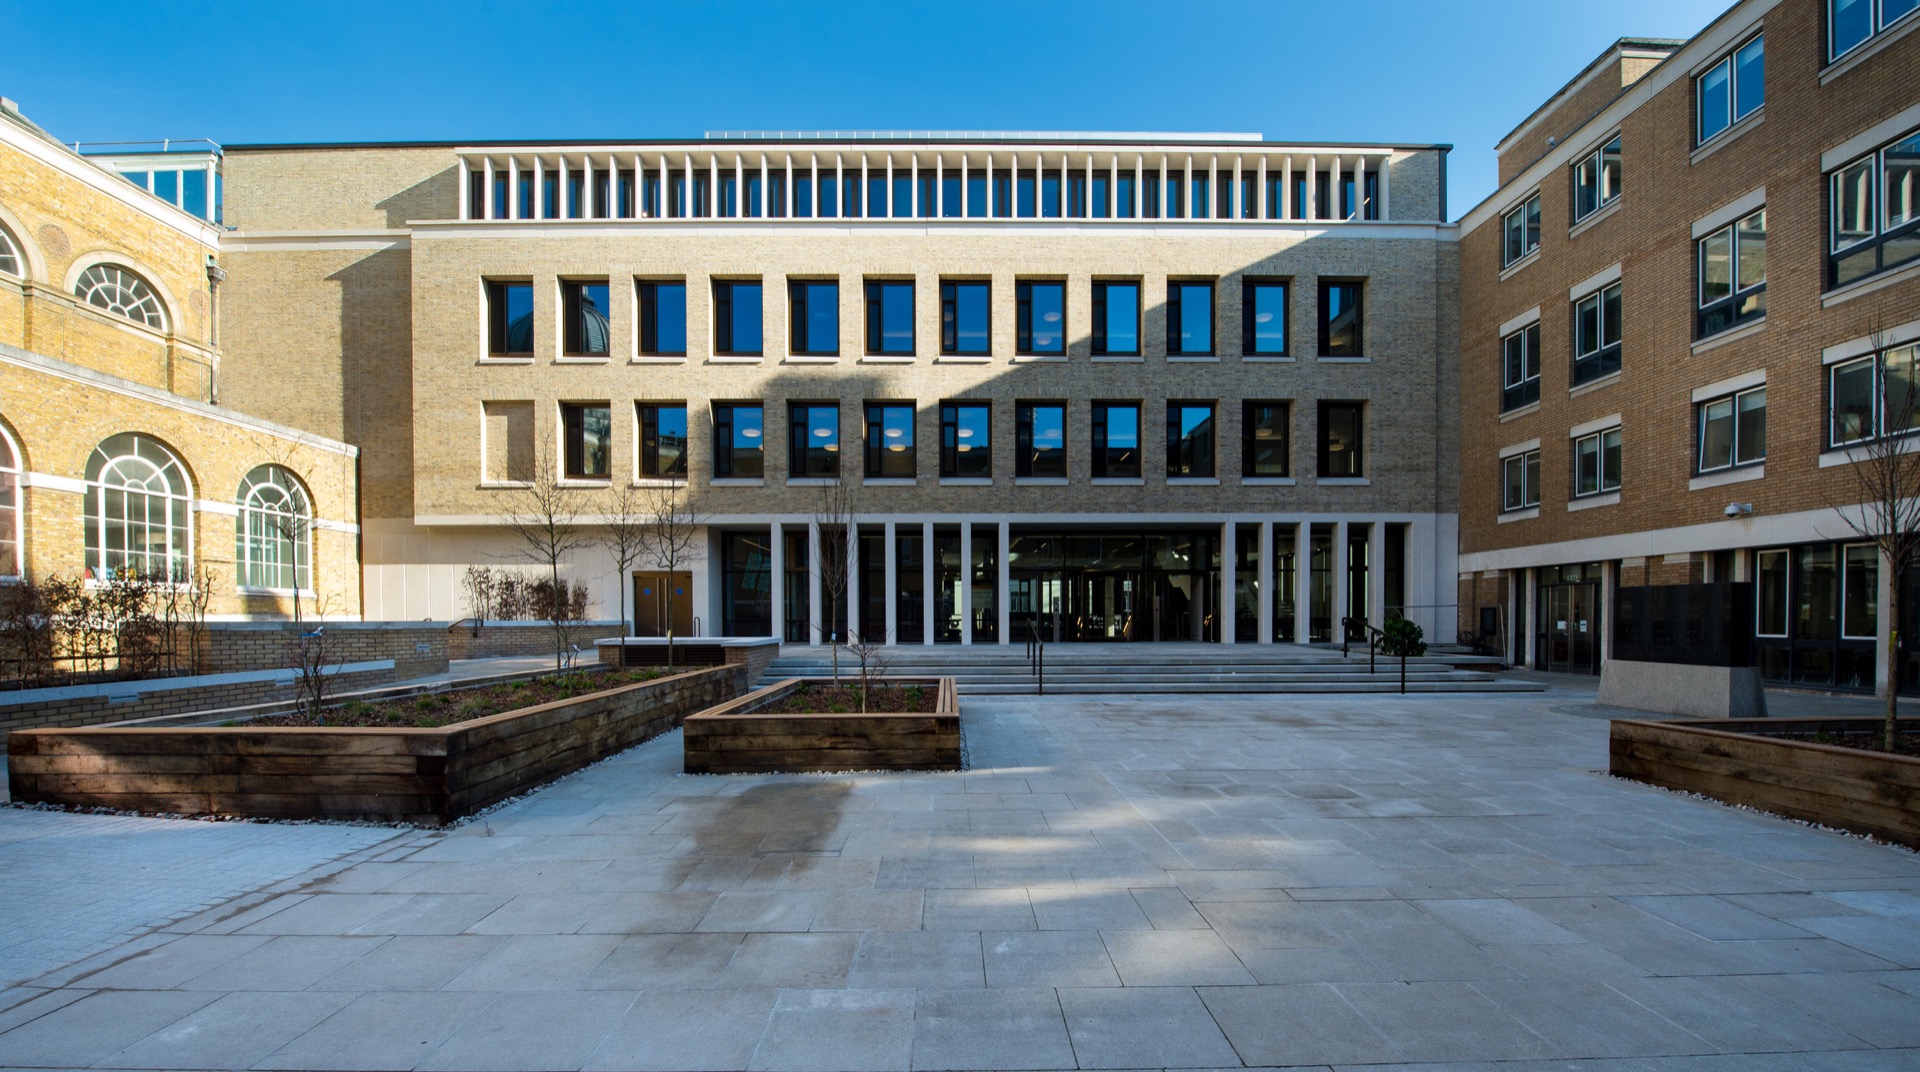 UCL Student Centre London library building architecture design exterior view